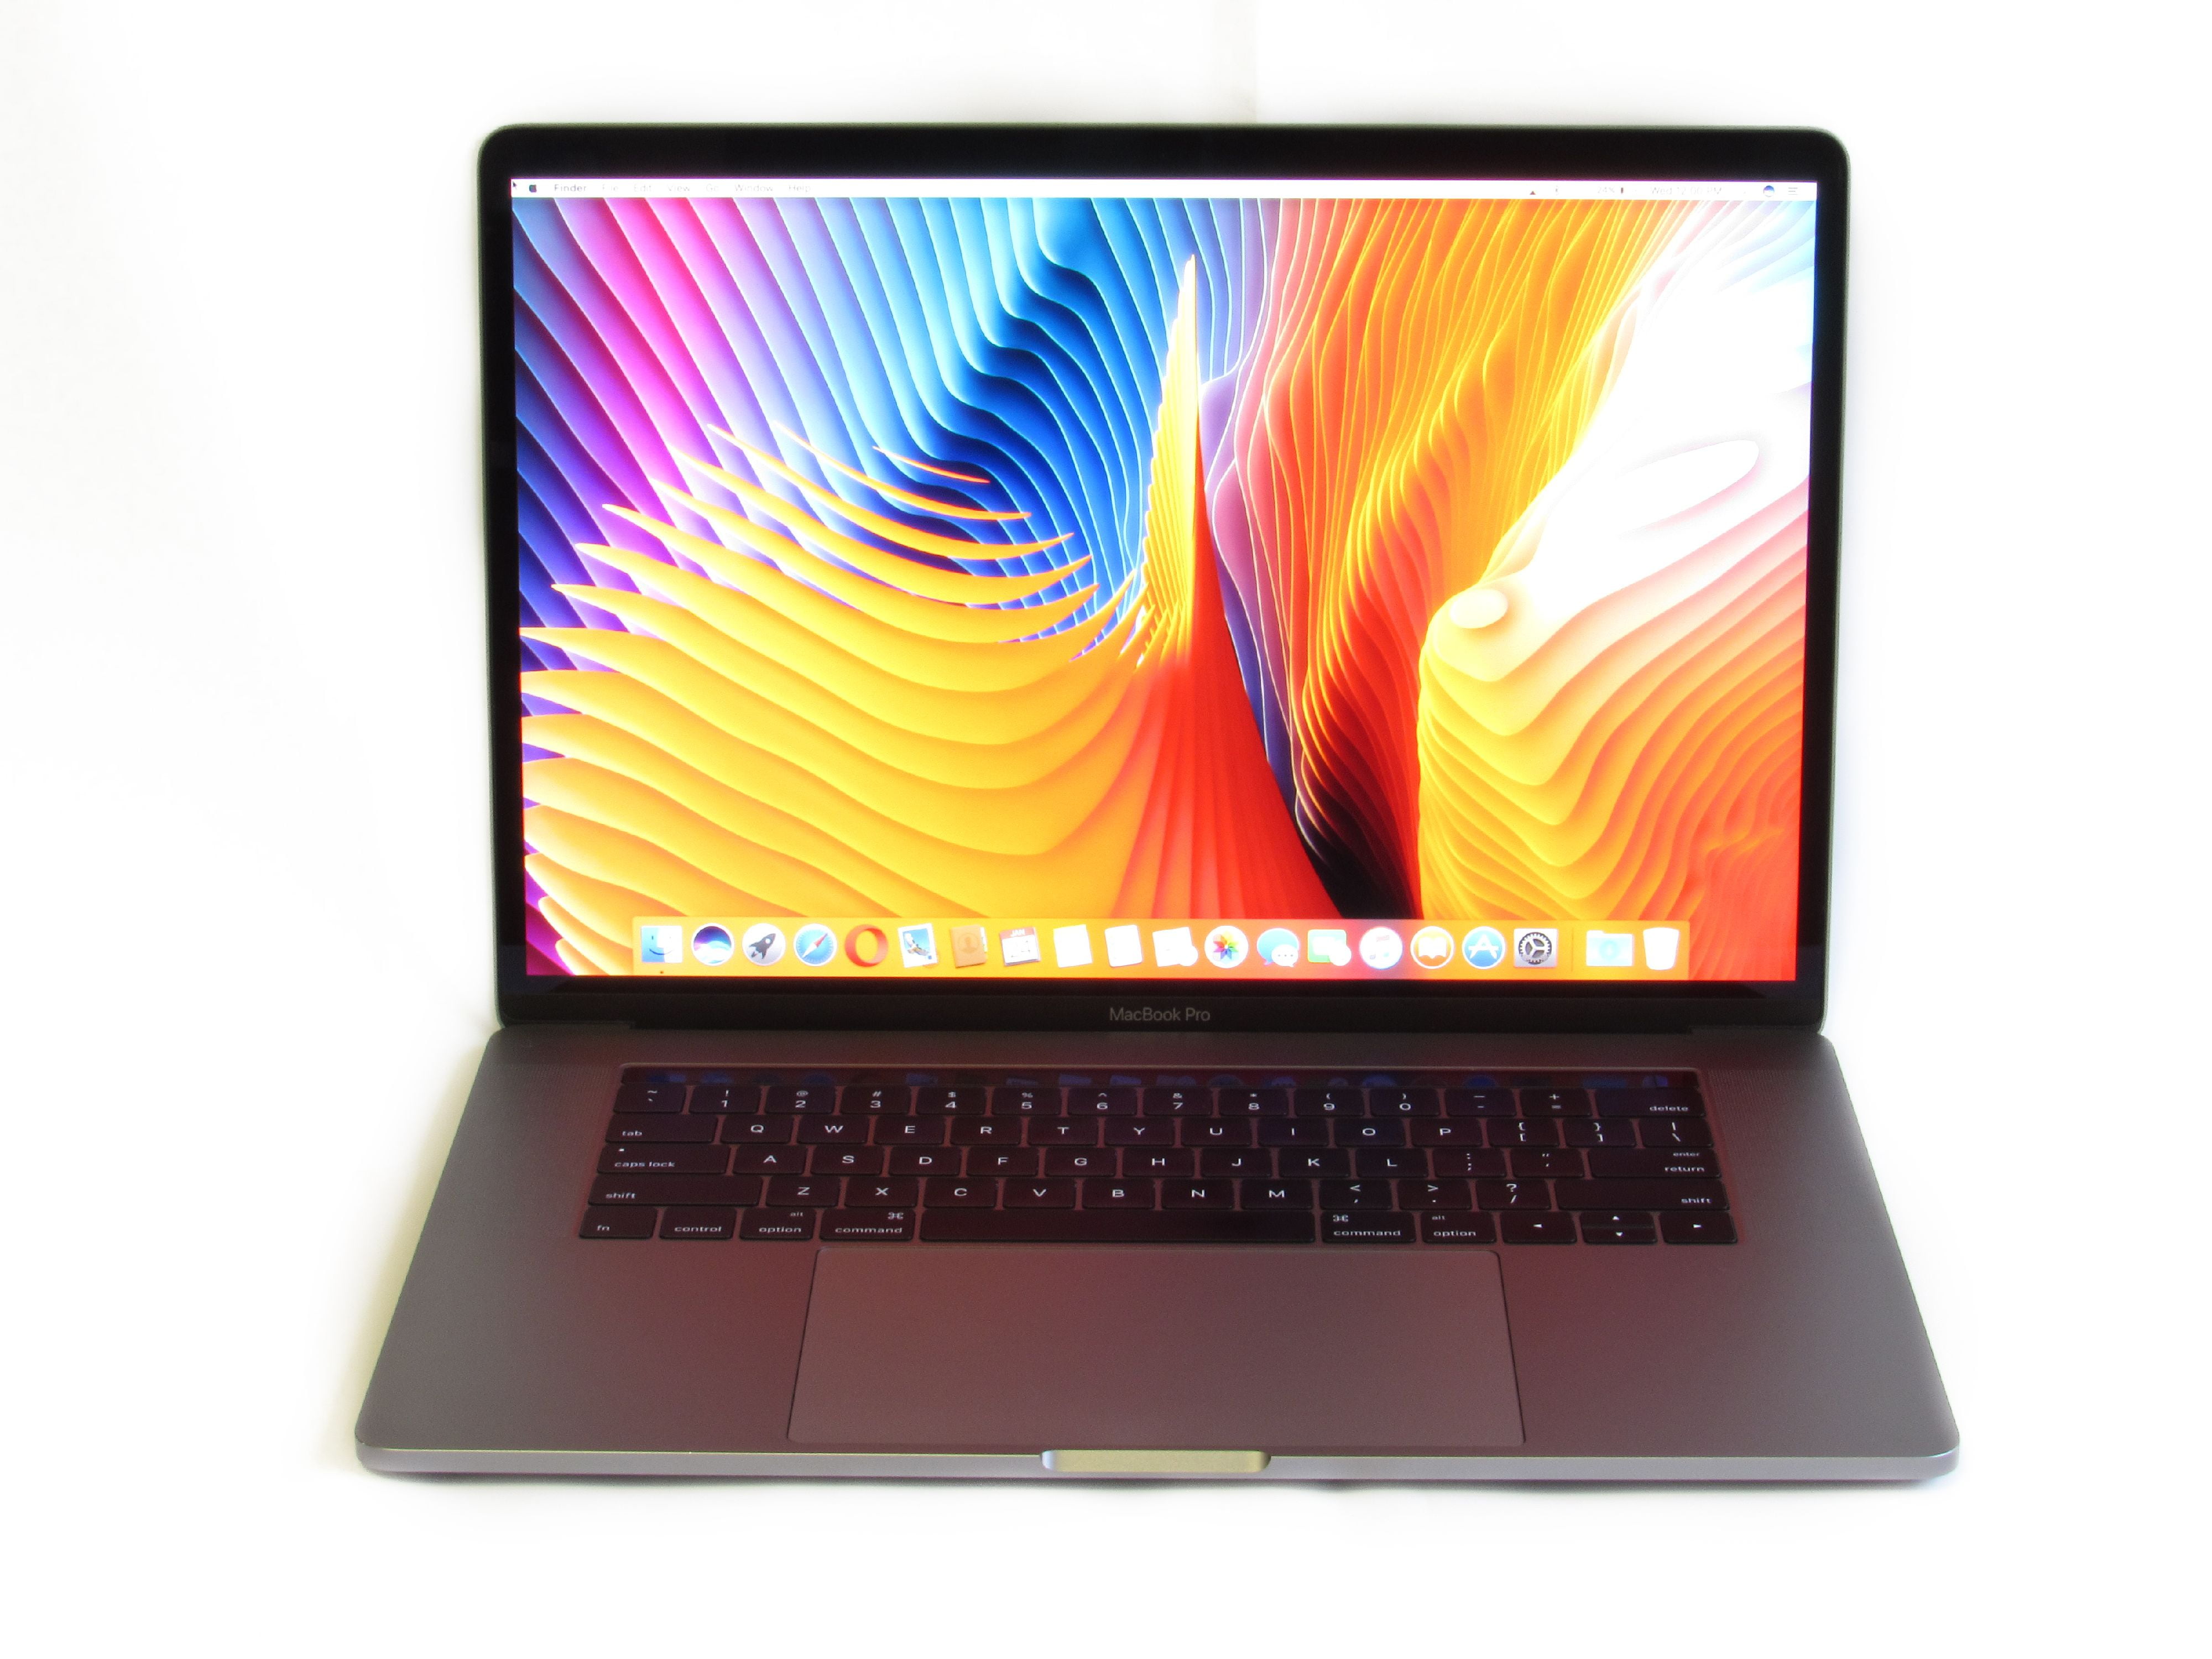 Space Gray Apple MacBook Pro 15-Inch Touch Bar Laptop i7 2.9GHz 16GB Ram  2TB SSD Radeon 460X 4GB Video MLH42LL/A OS X Mojave Grade A 